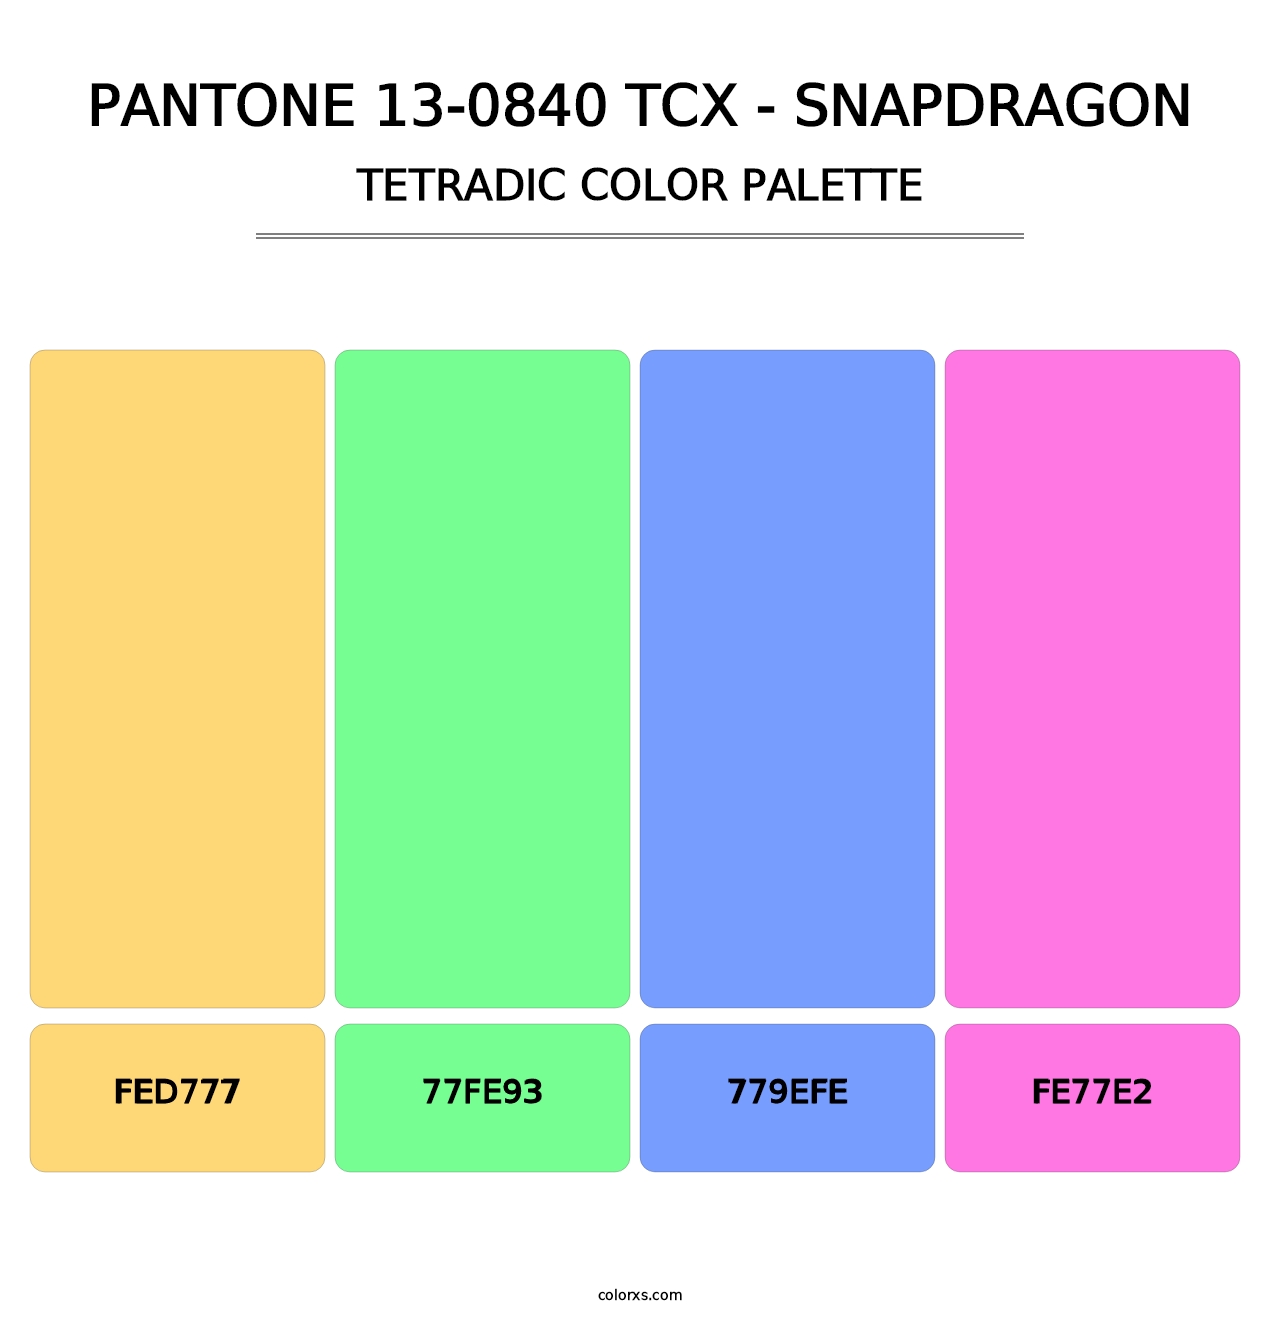 PANTONE 13-0840 TCX - Snapdragon - Tetradic Color Palette